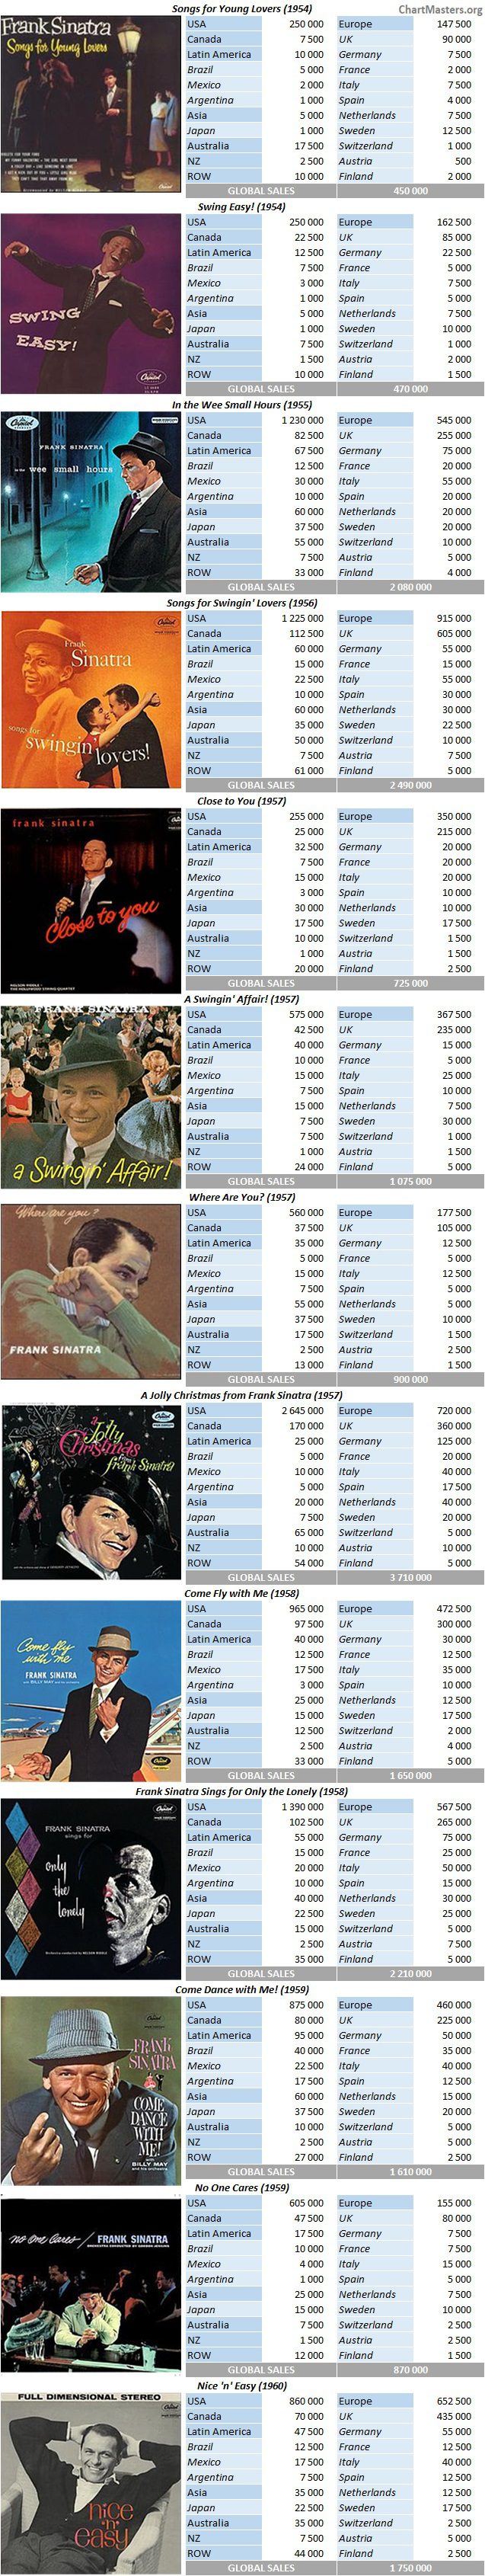 CSPC Frank Sinatra Capitol album sales breakdowns